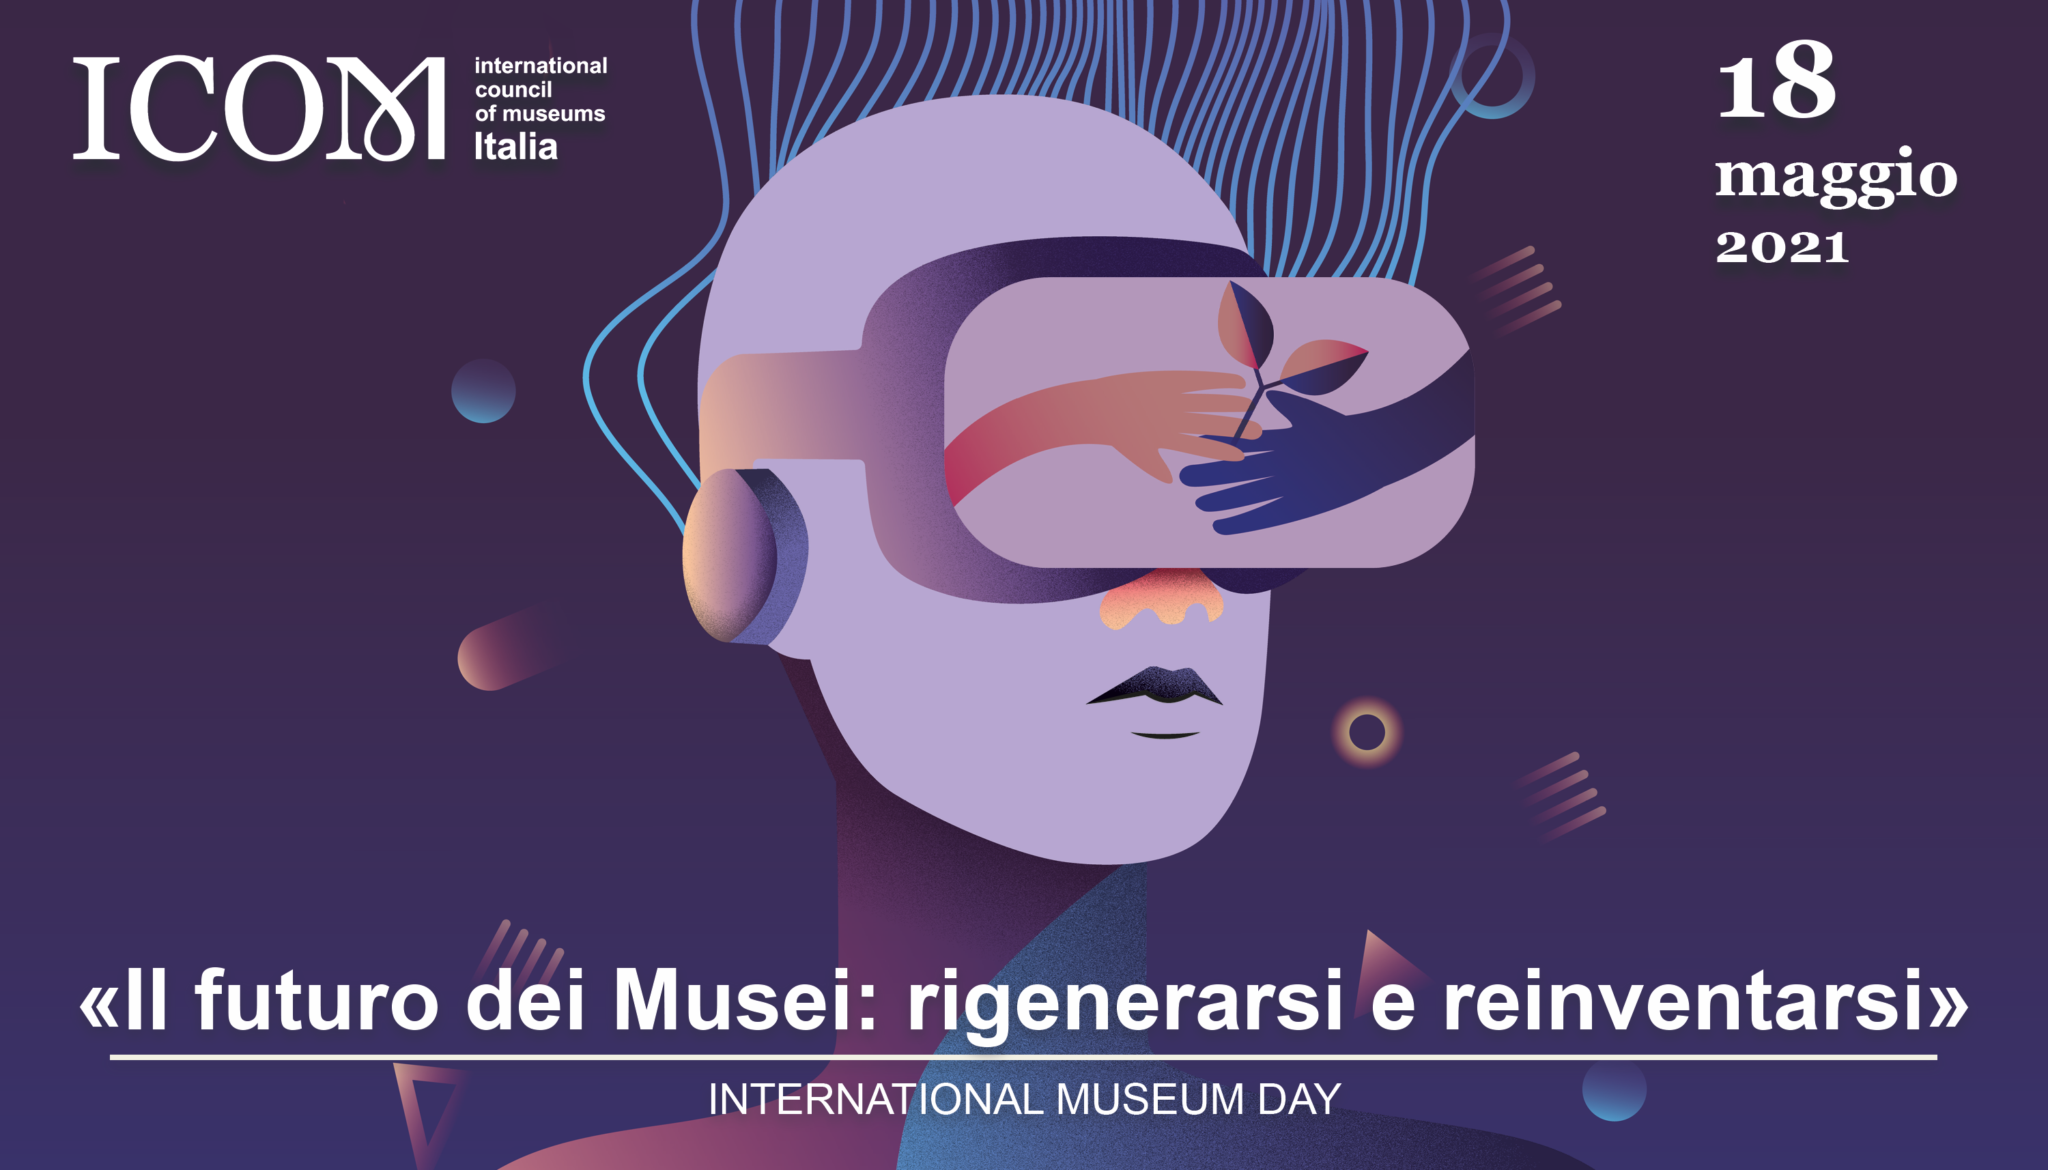 International Museum Day: 18 maggio 2021